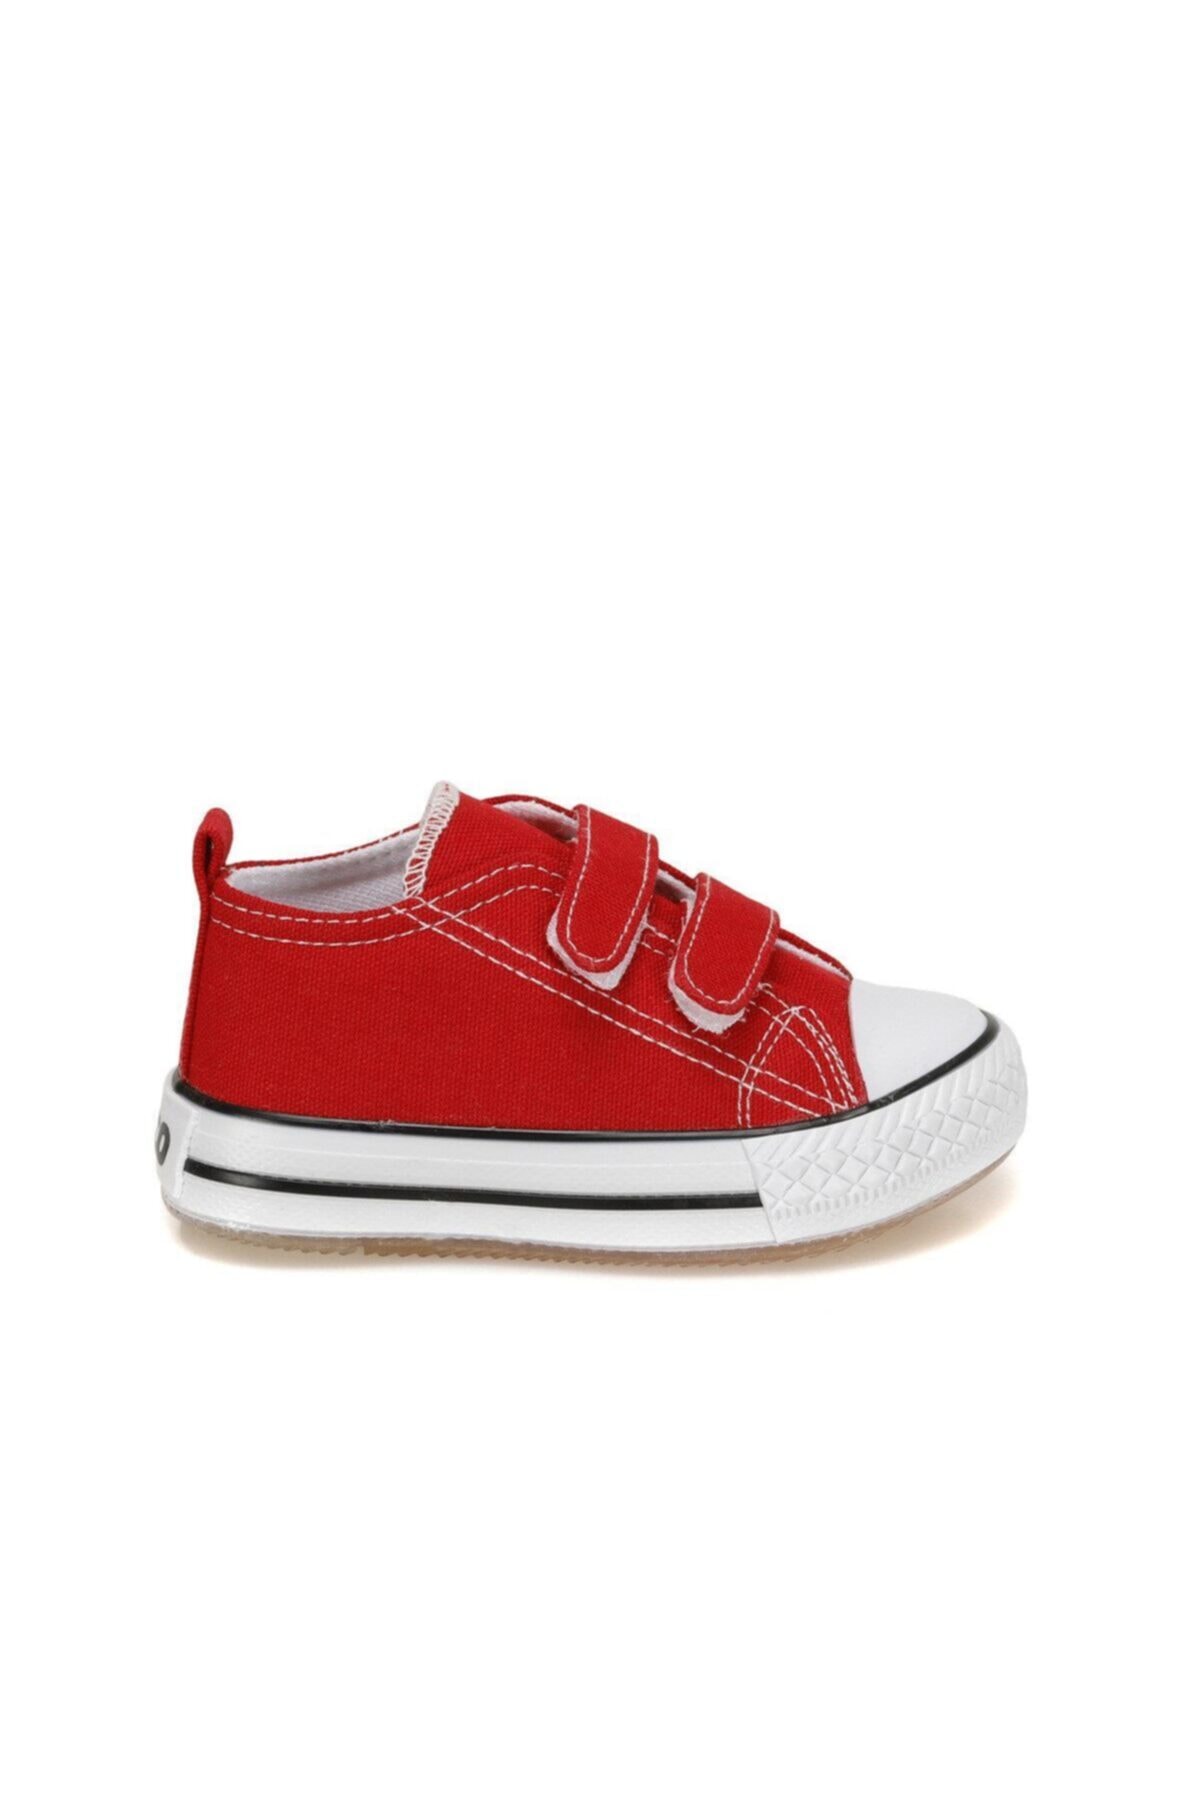 Vicco Pino Kırmızı Çocuk Sneaker Ayakkabı